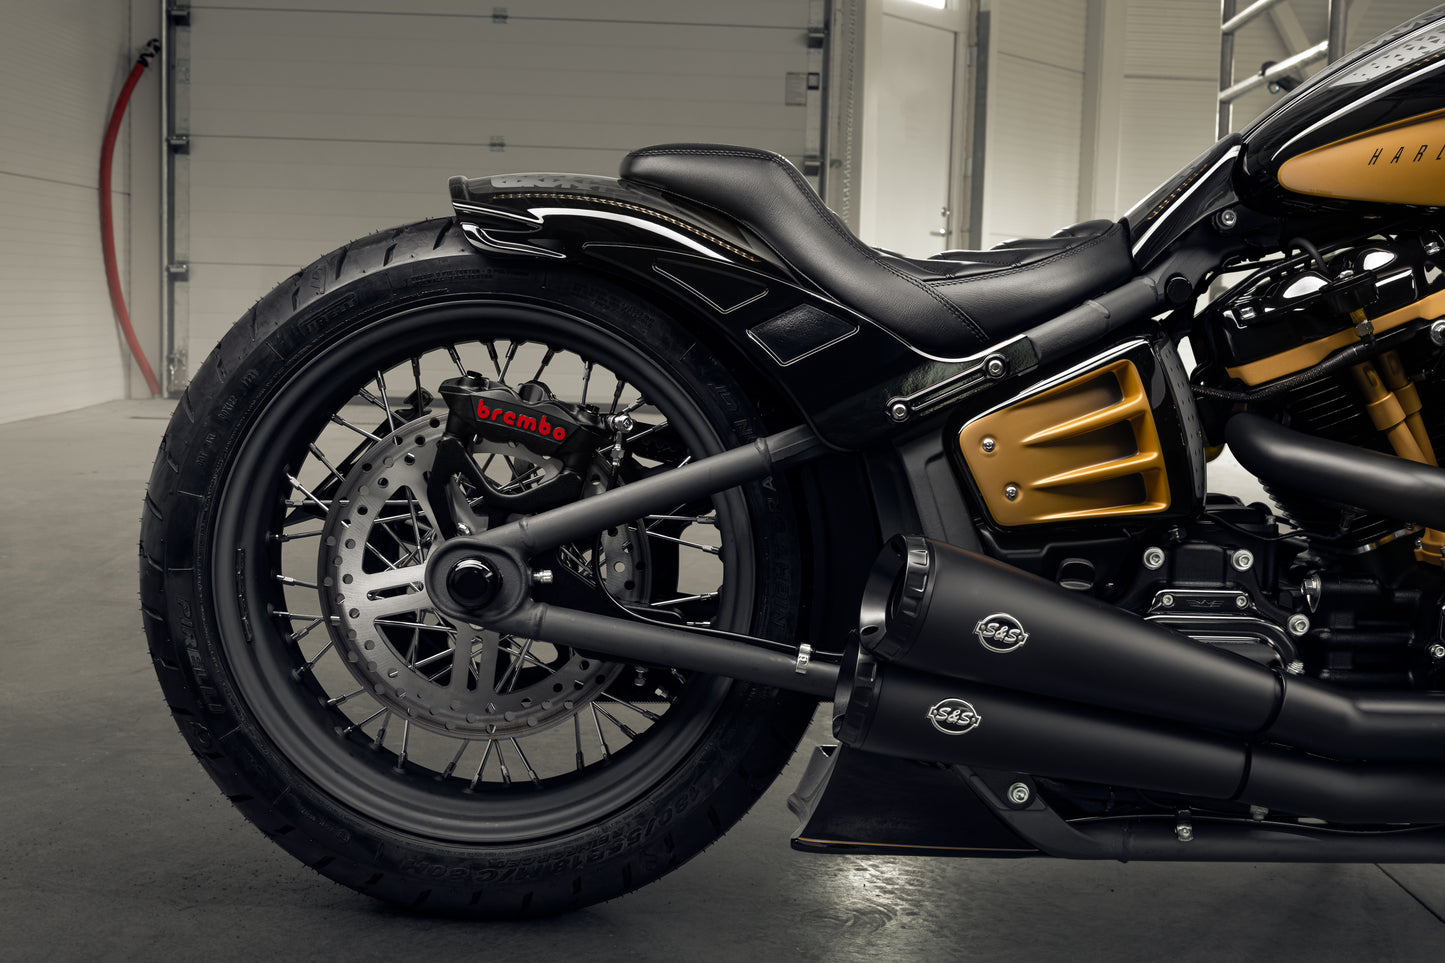 Harley Davidson motorcycle with Killer Custom "Rodstr" rear fender from the side in a modern garage